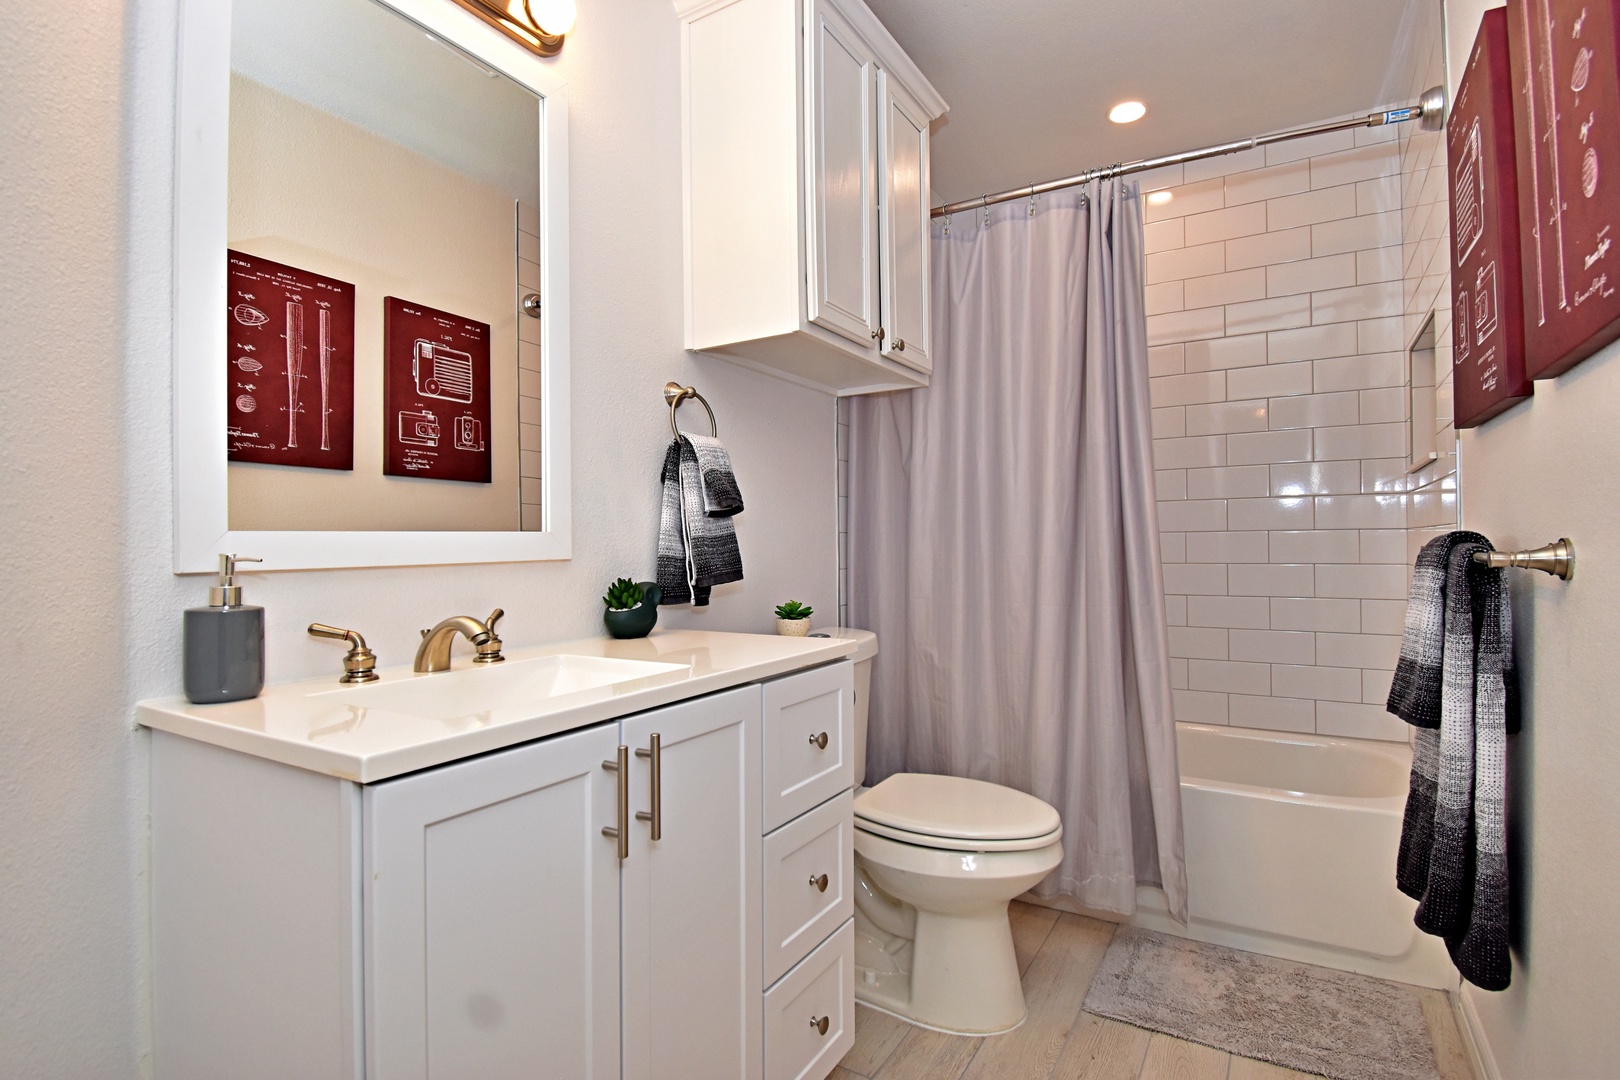 This 2nd floor full bath offers a sleek single vanity & shower/tub combo